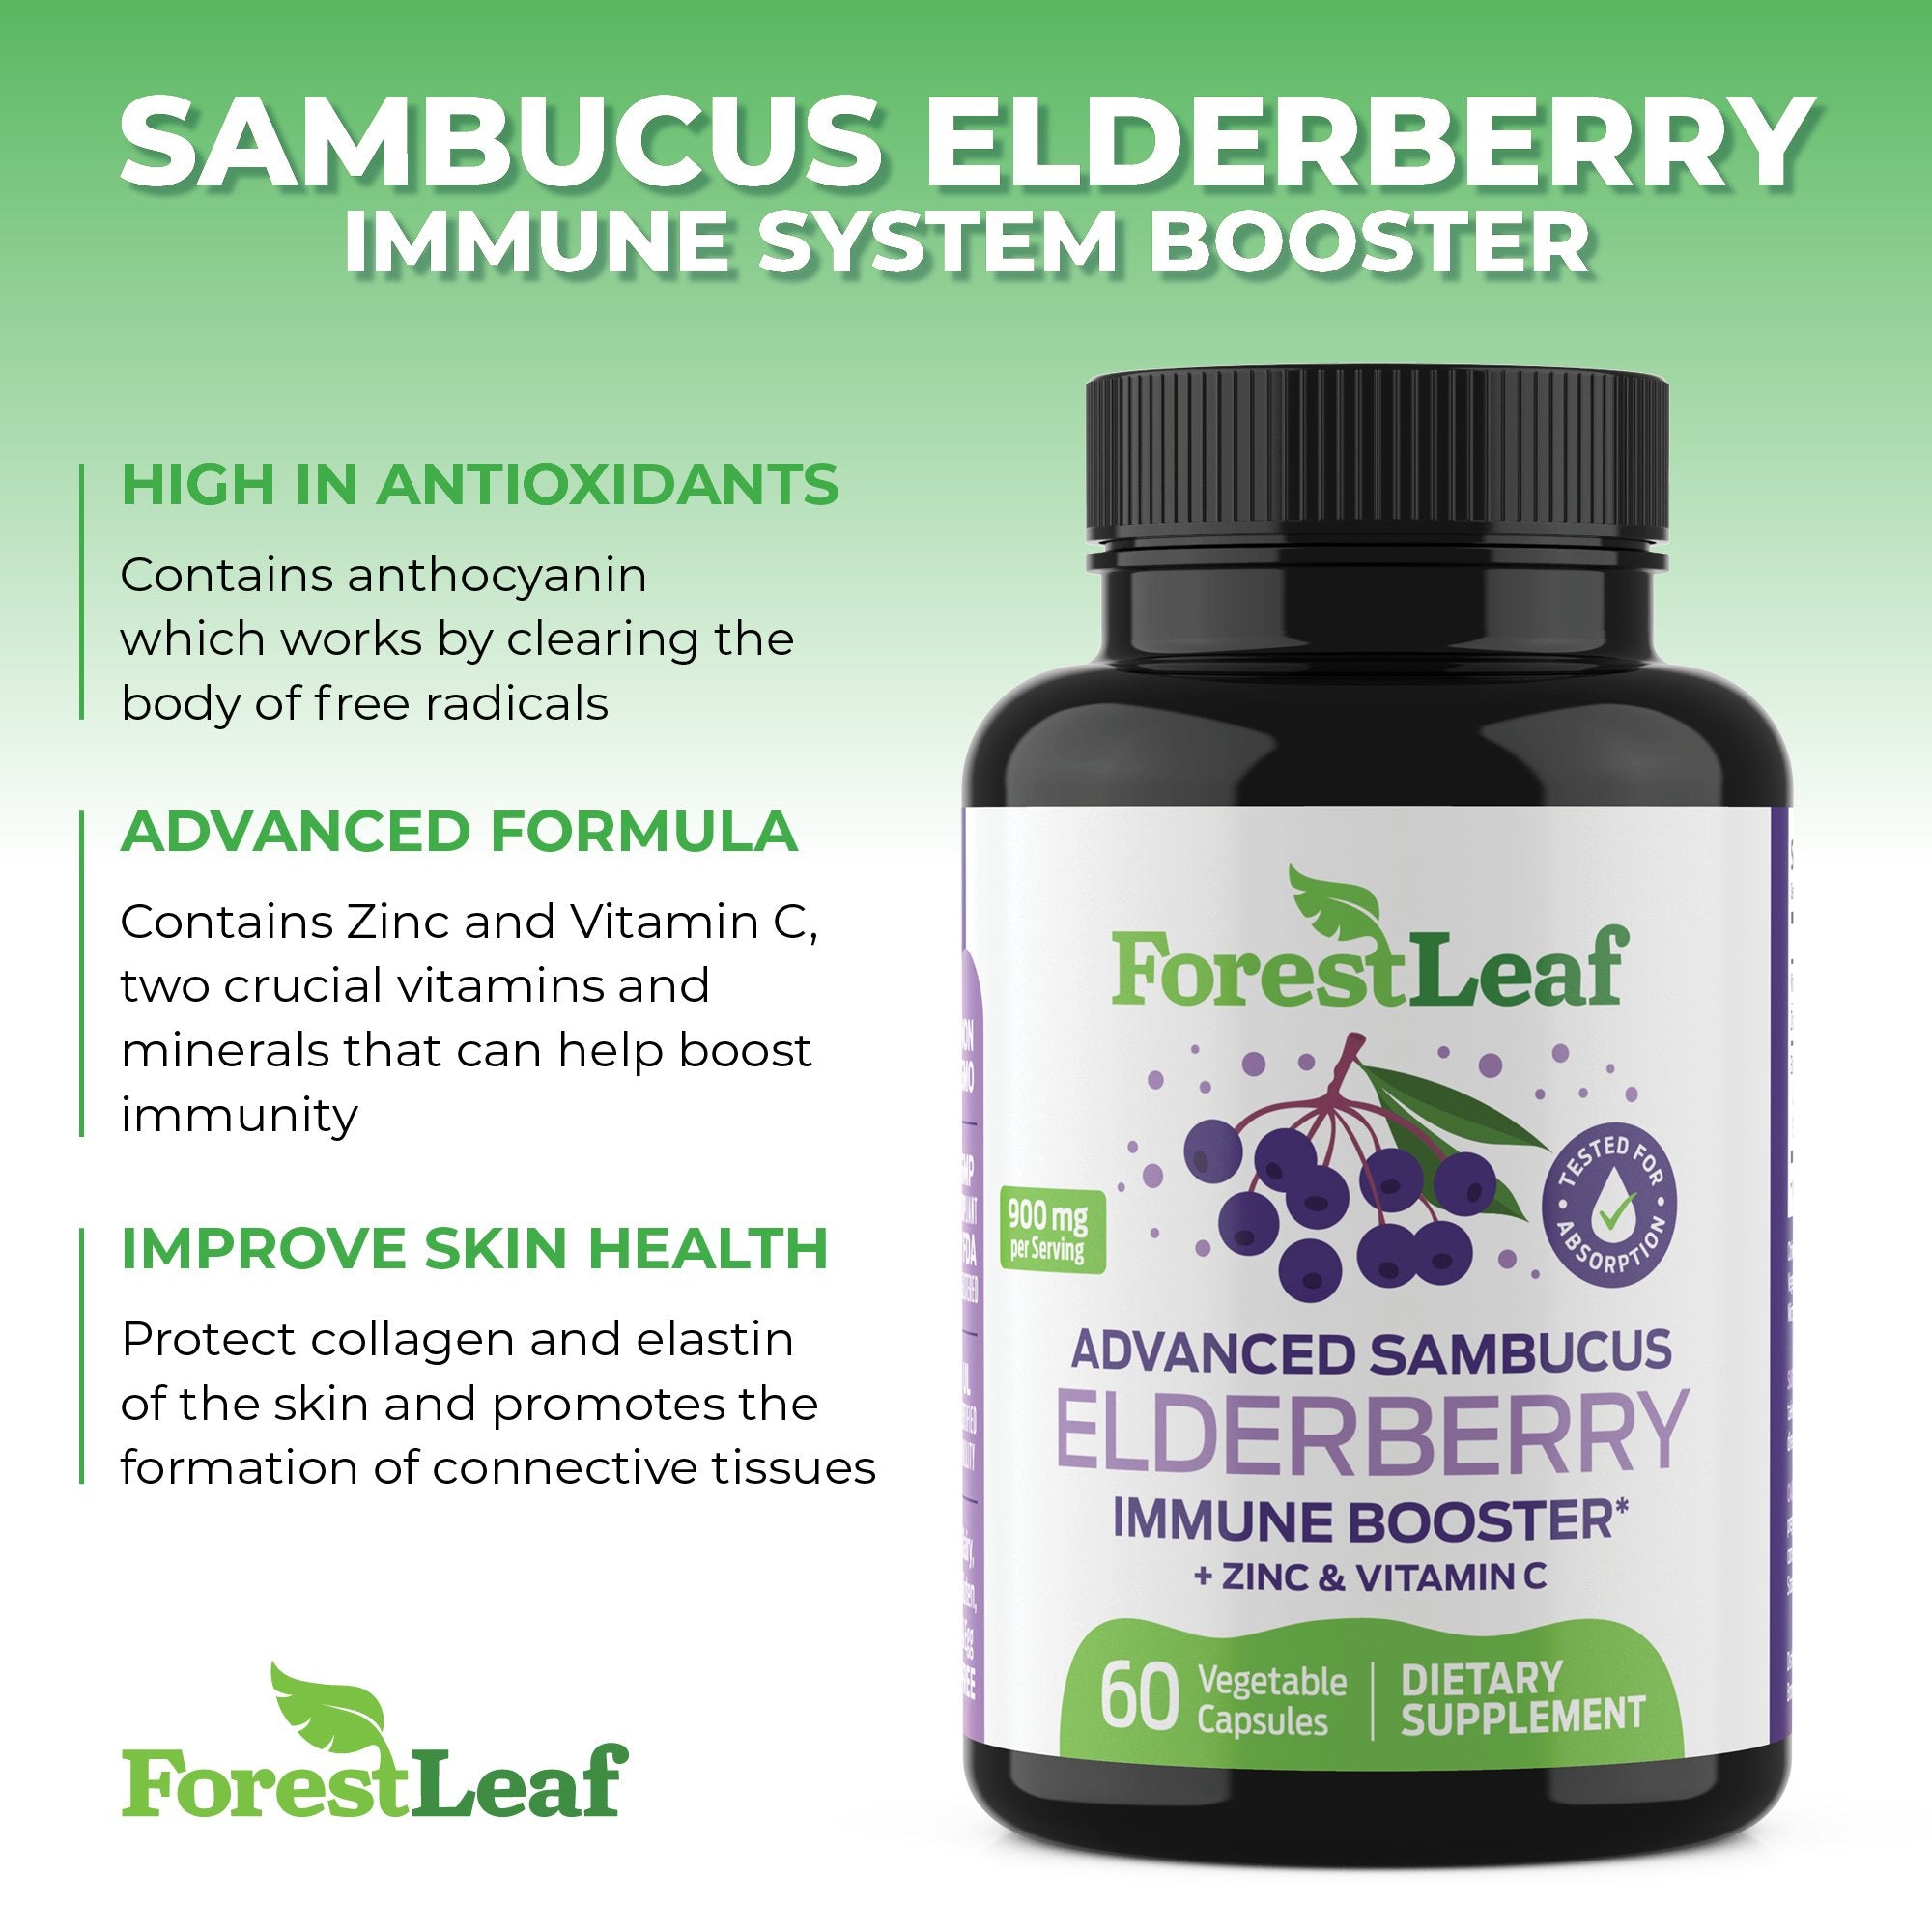 Advanced Sambucus Elderberry